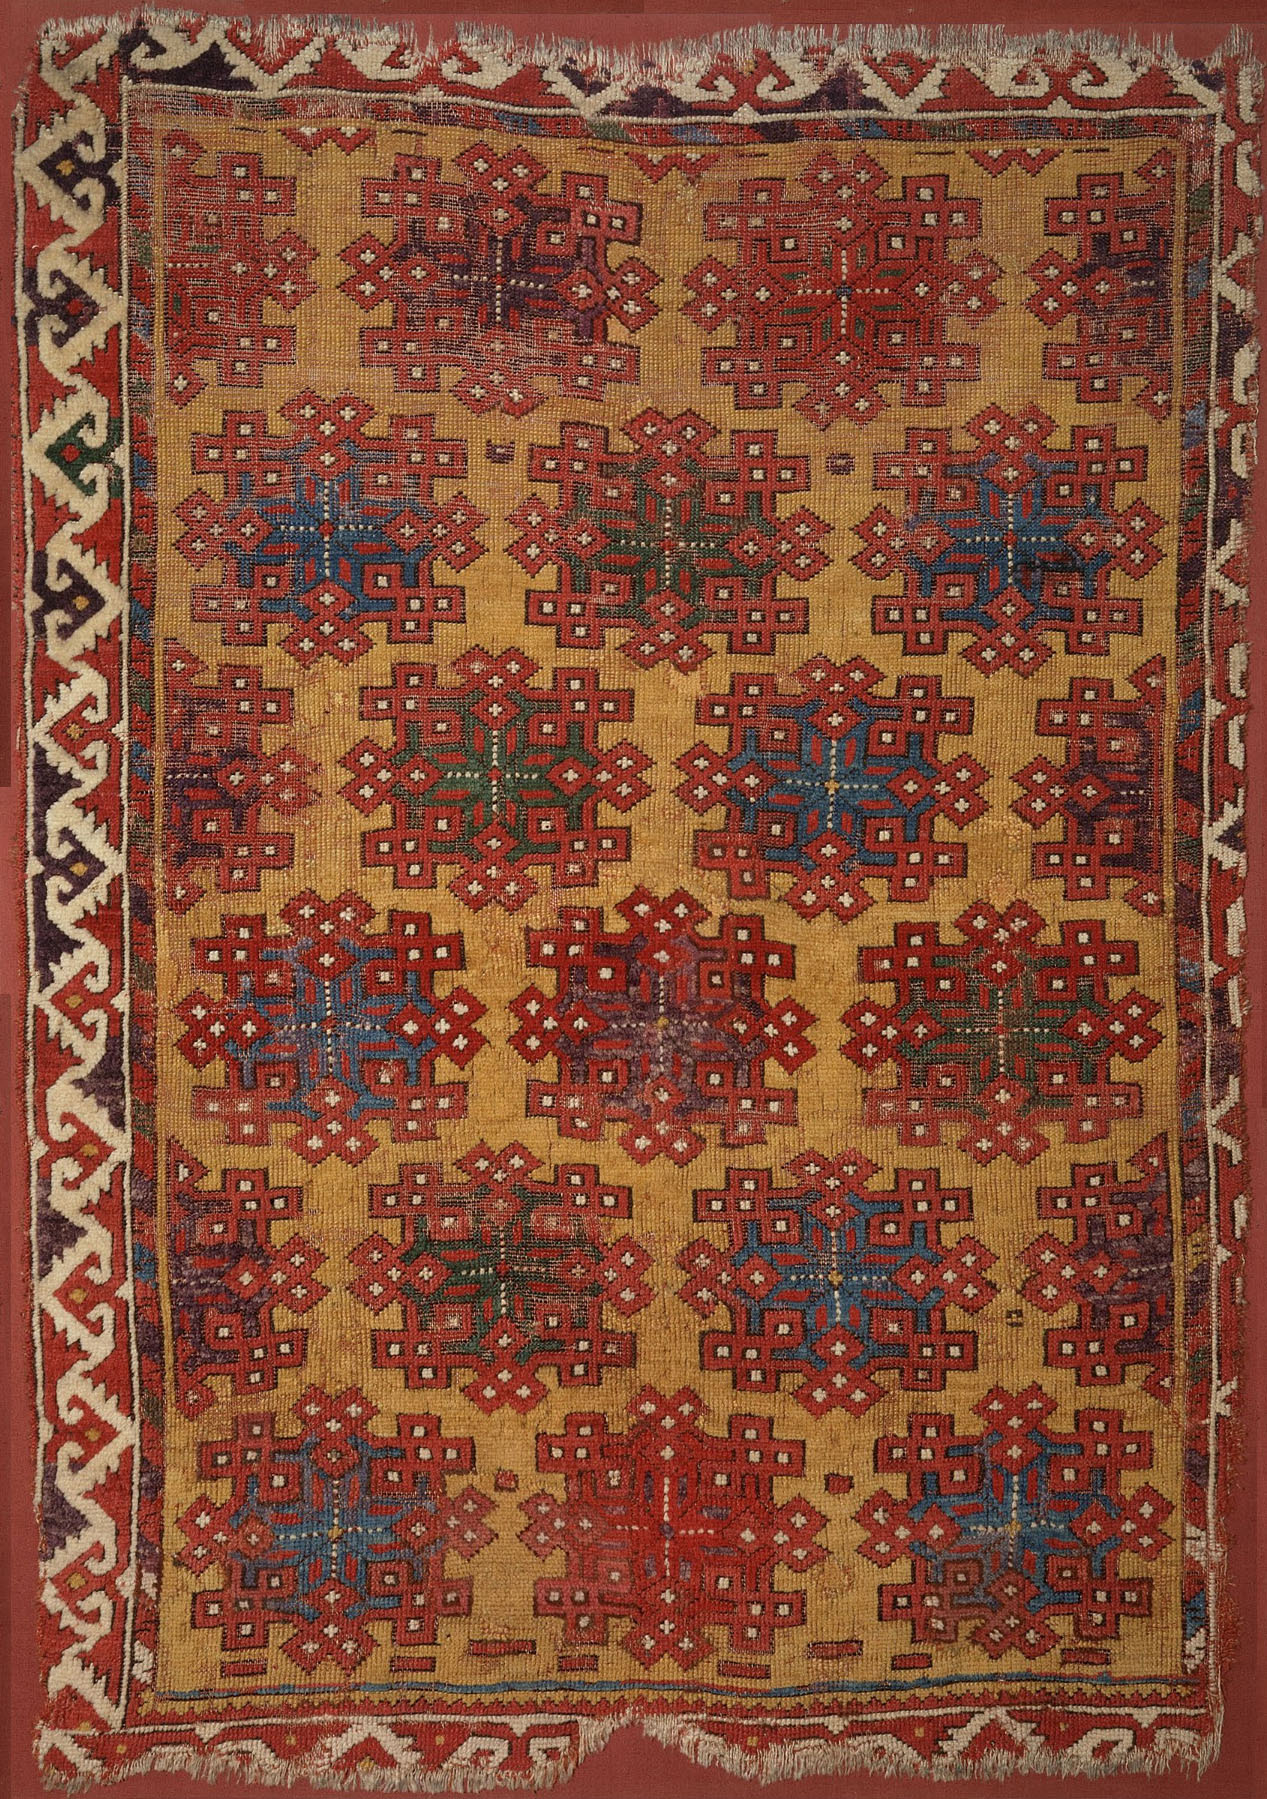 Bellni patterned workshop carpet 16th century Western Anatolia